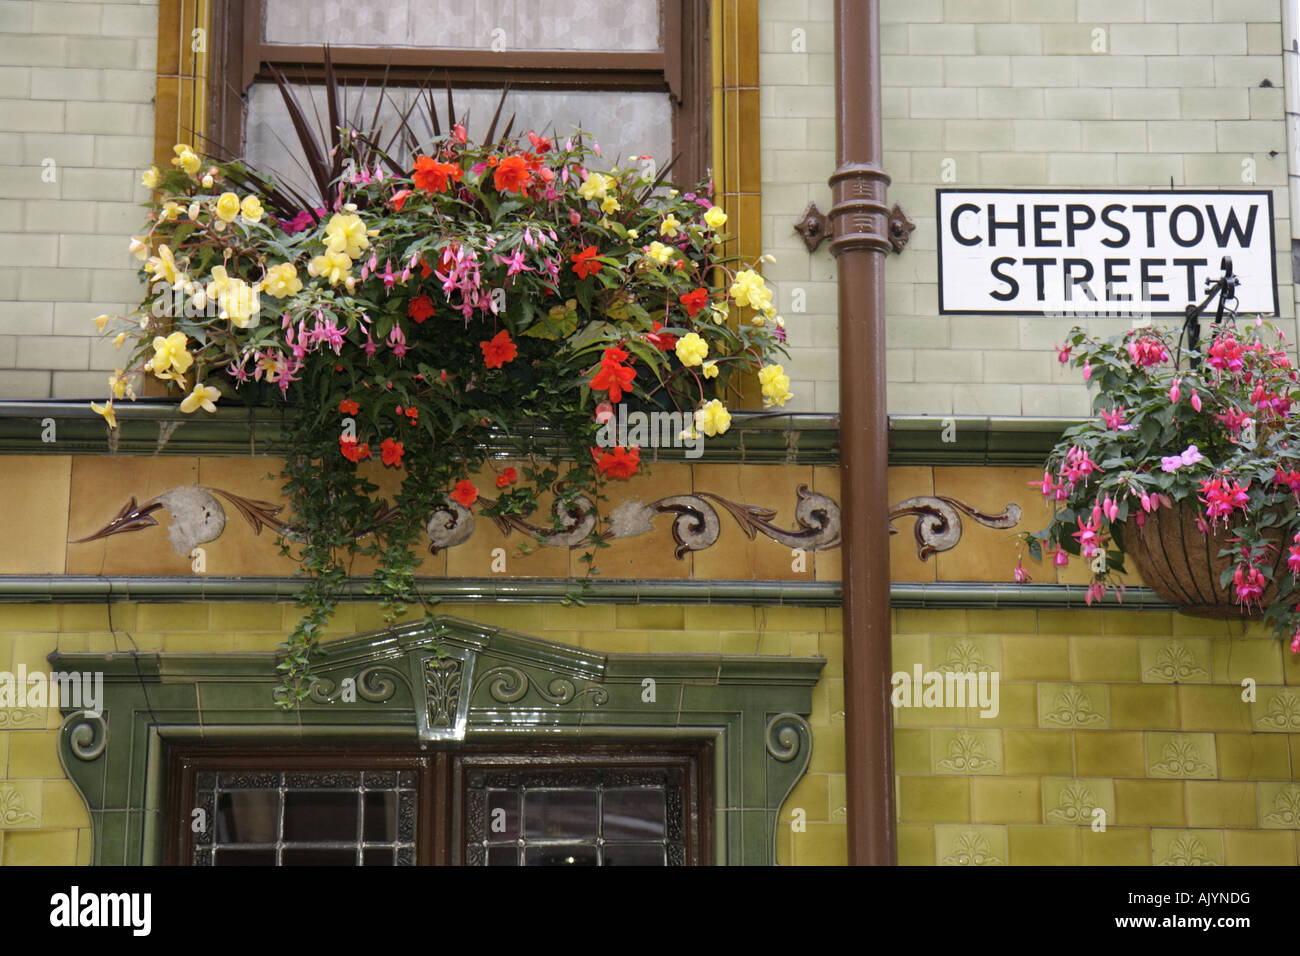 UK England Lancashire,Manchester,City Centre,Chepstow Street,Wilsons Peveril of the Peak Pub,flower basket,UK071001003 Stock Photo